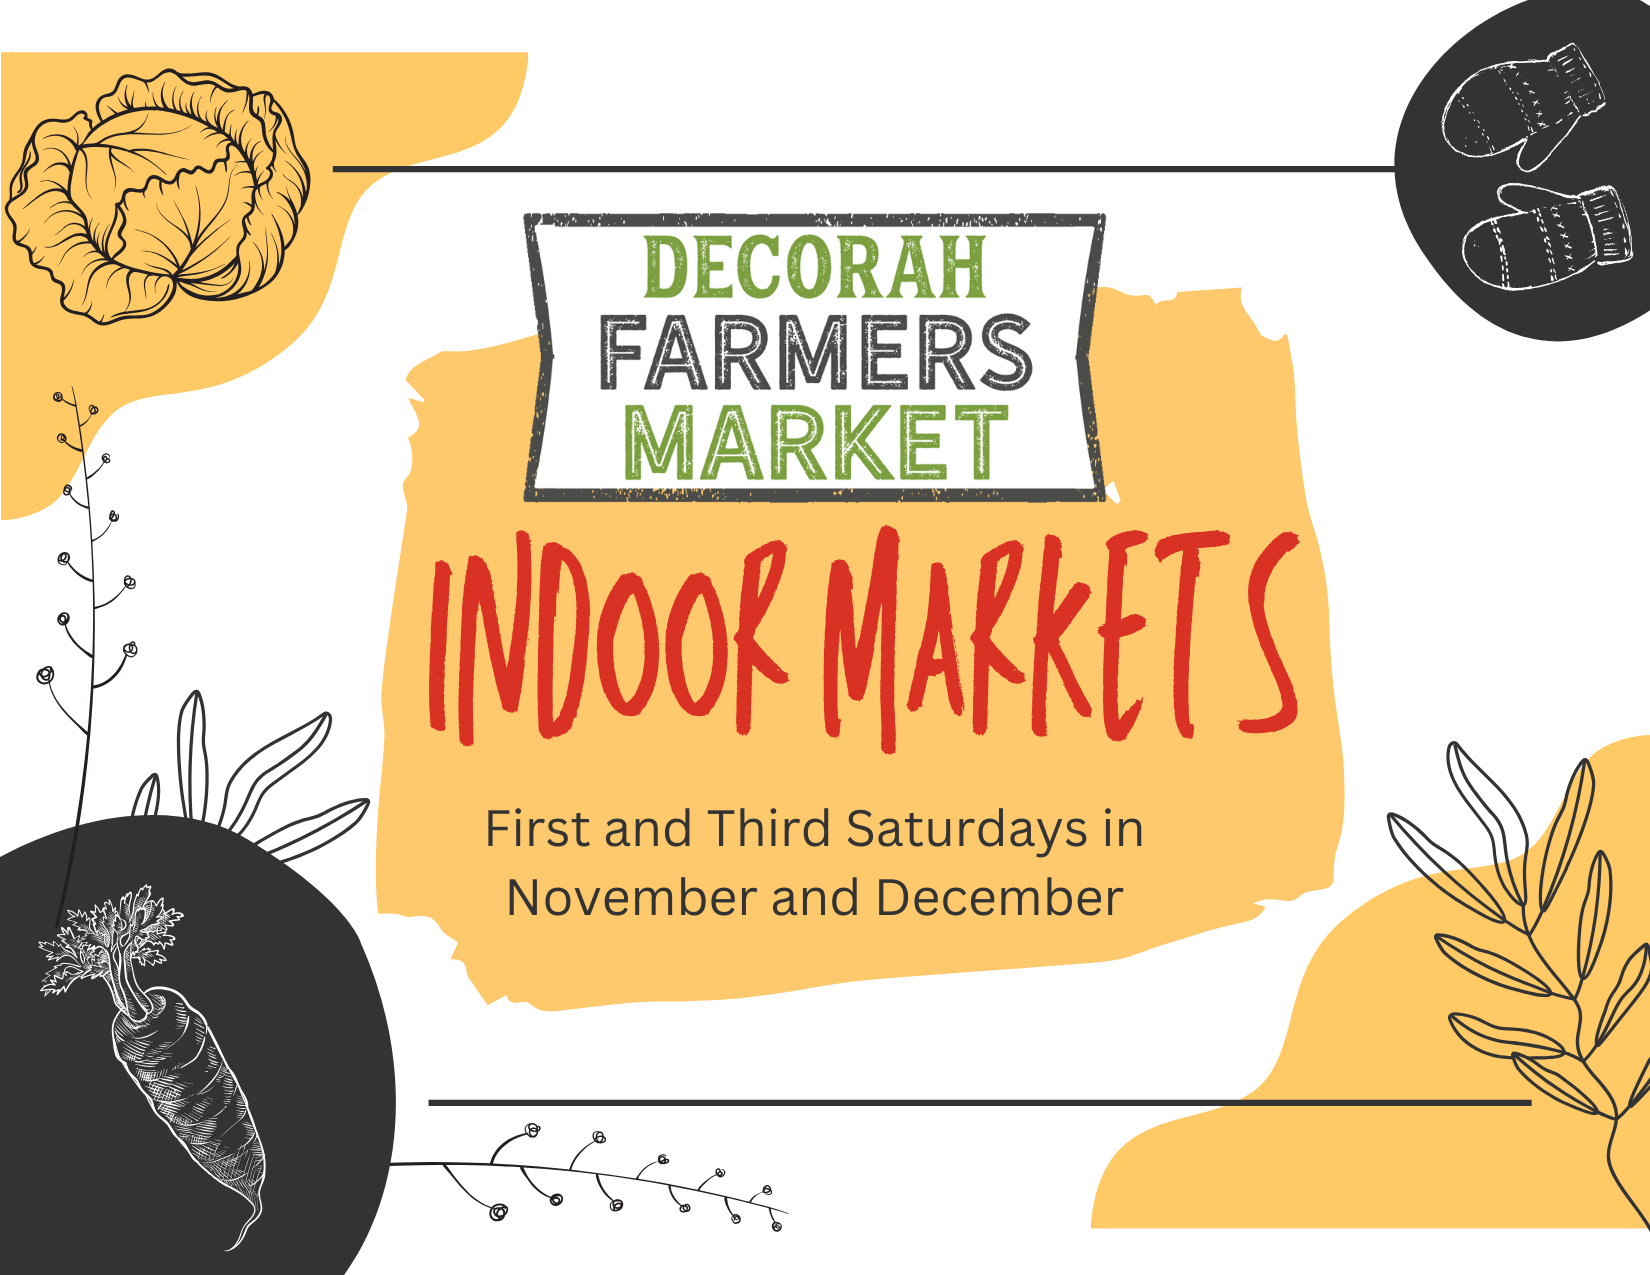 Decorah Farmers Market: Indoor Market - Eat Local This Thanksgiving! thumbnail